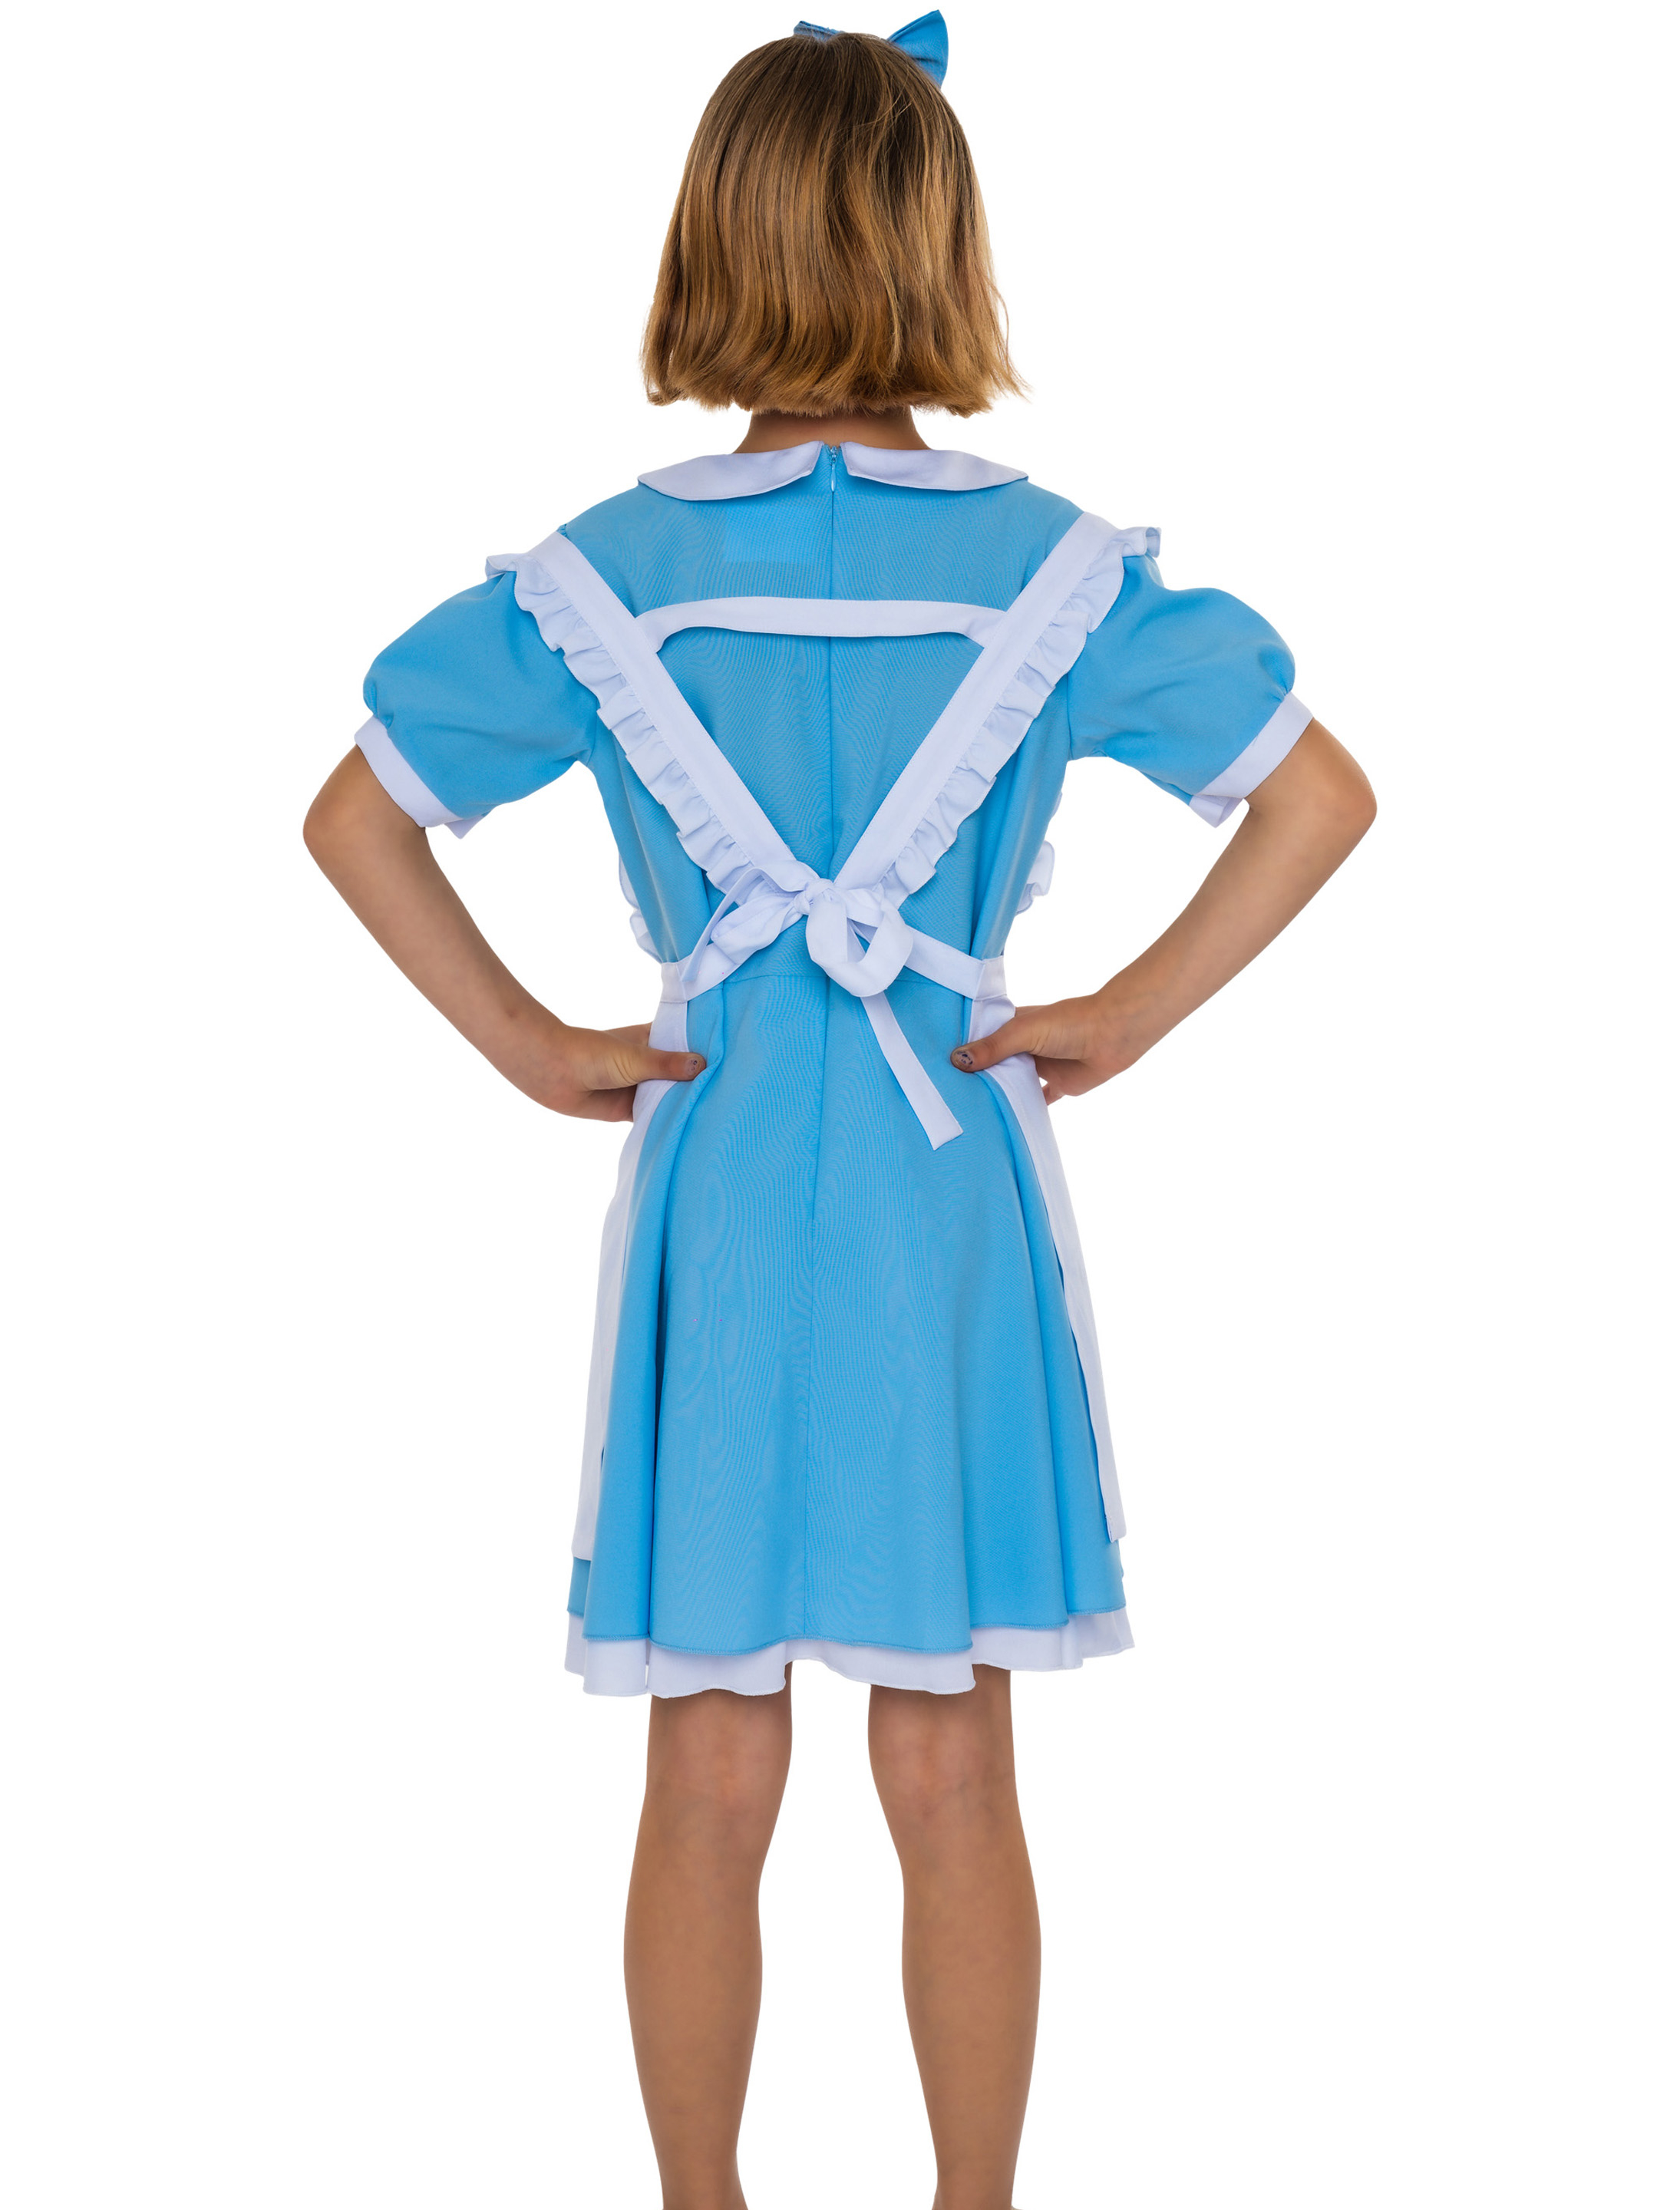 Kleid Alice Kinder blau/weiß 152